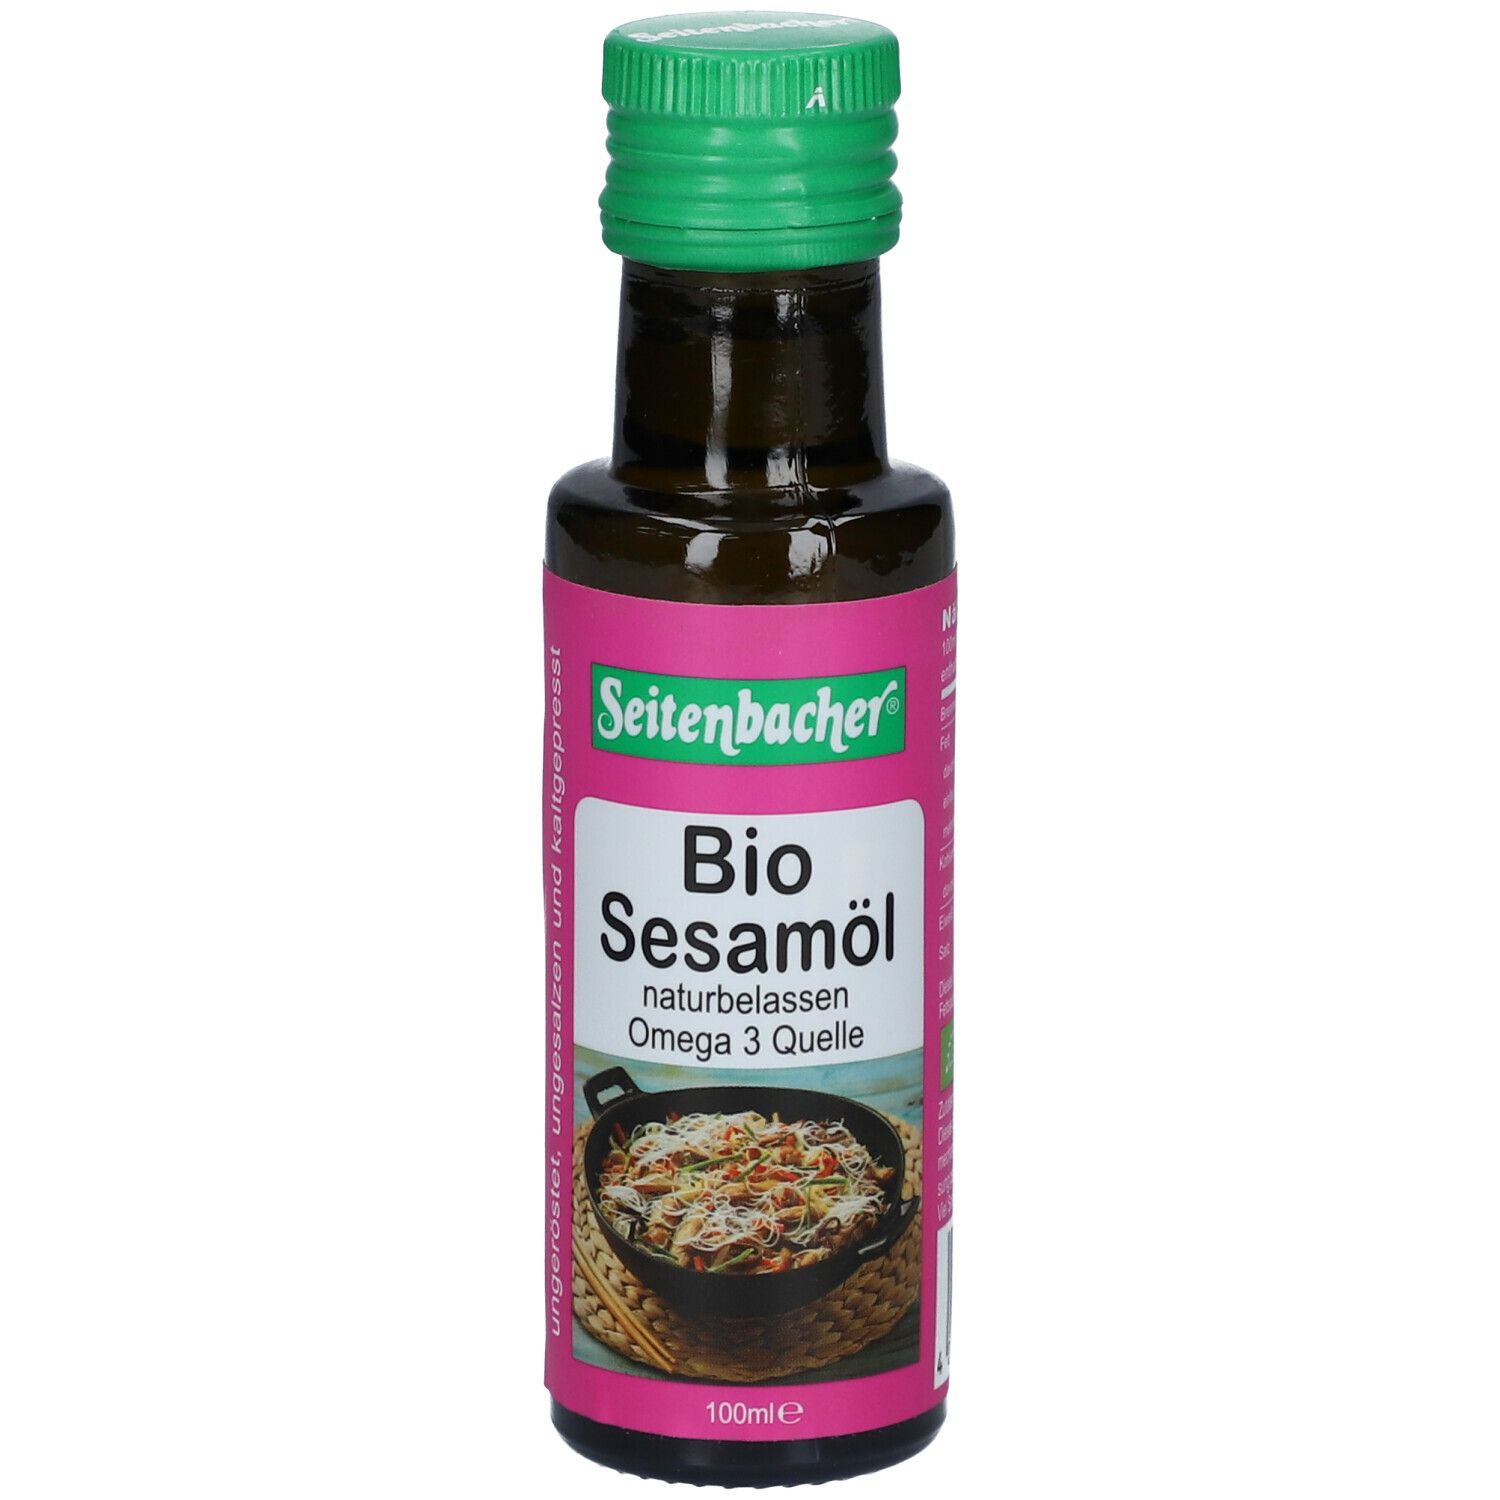 Seitenbacher® Bio Sesam Öl